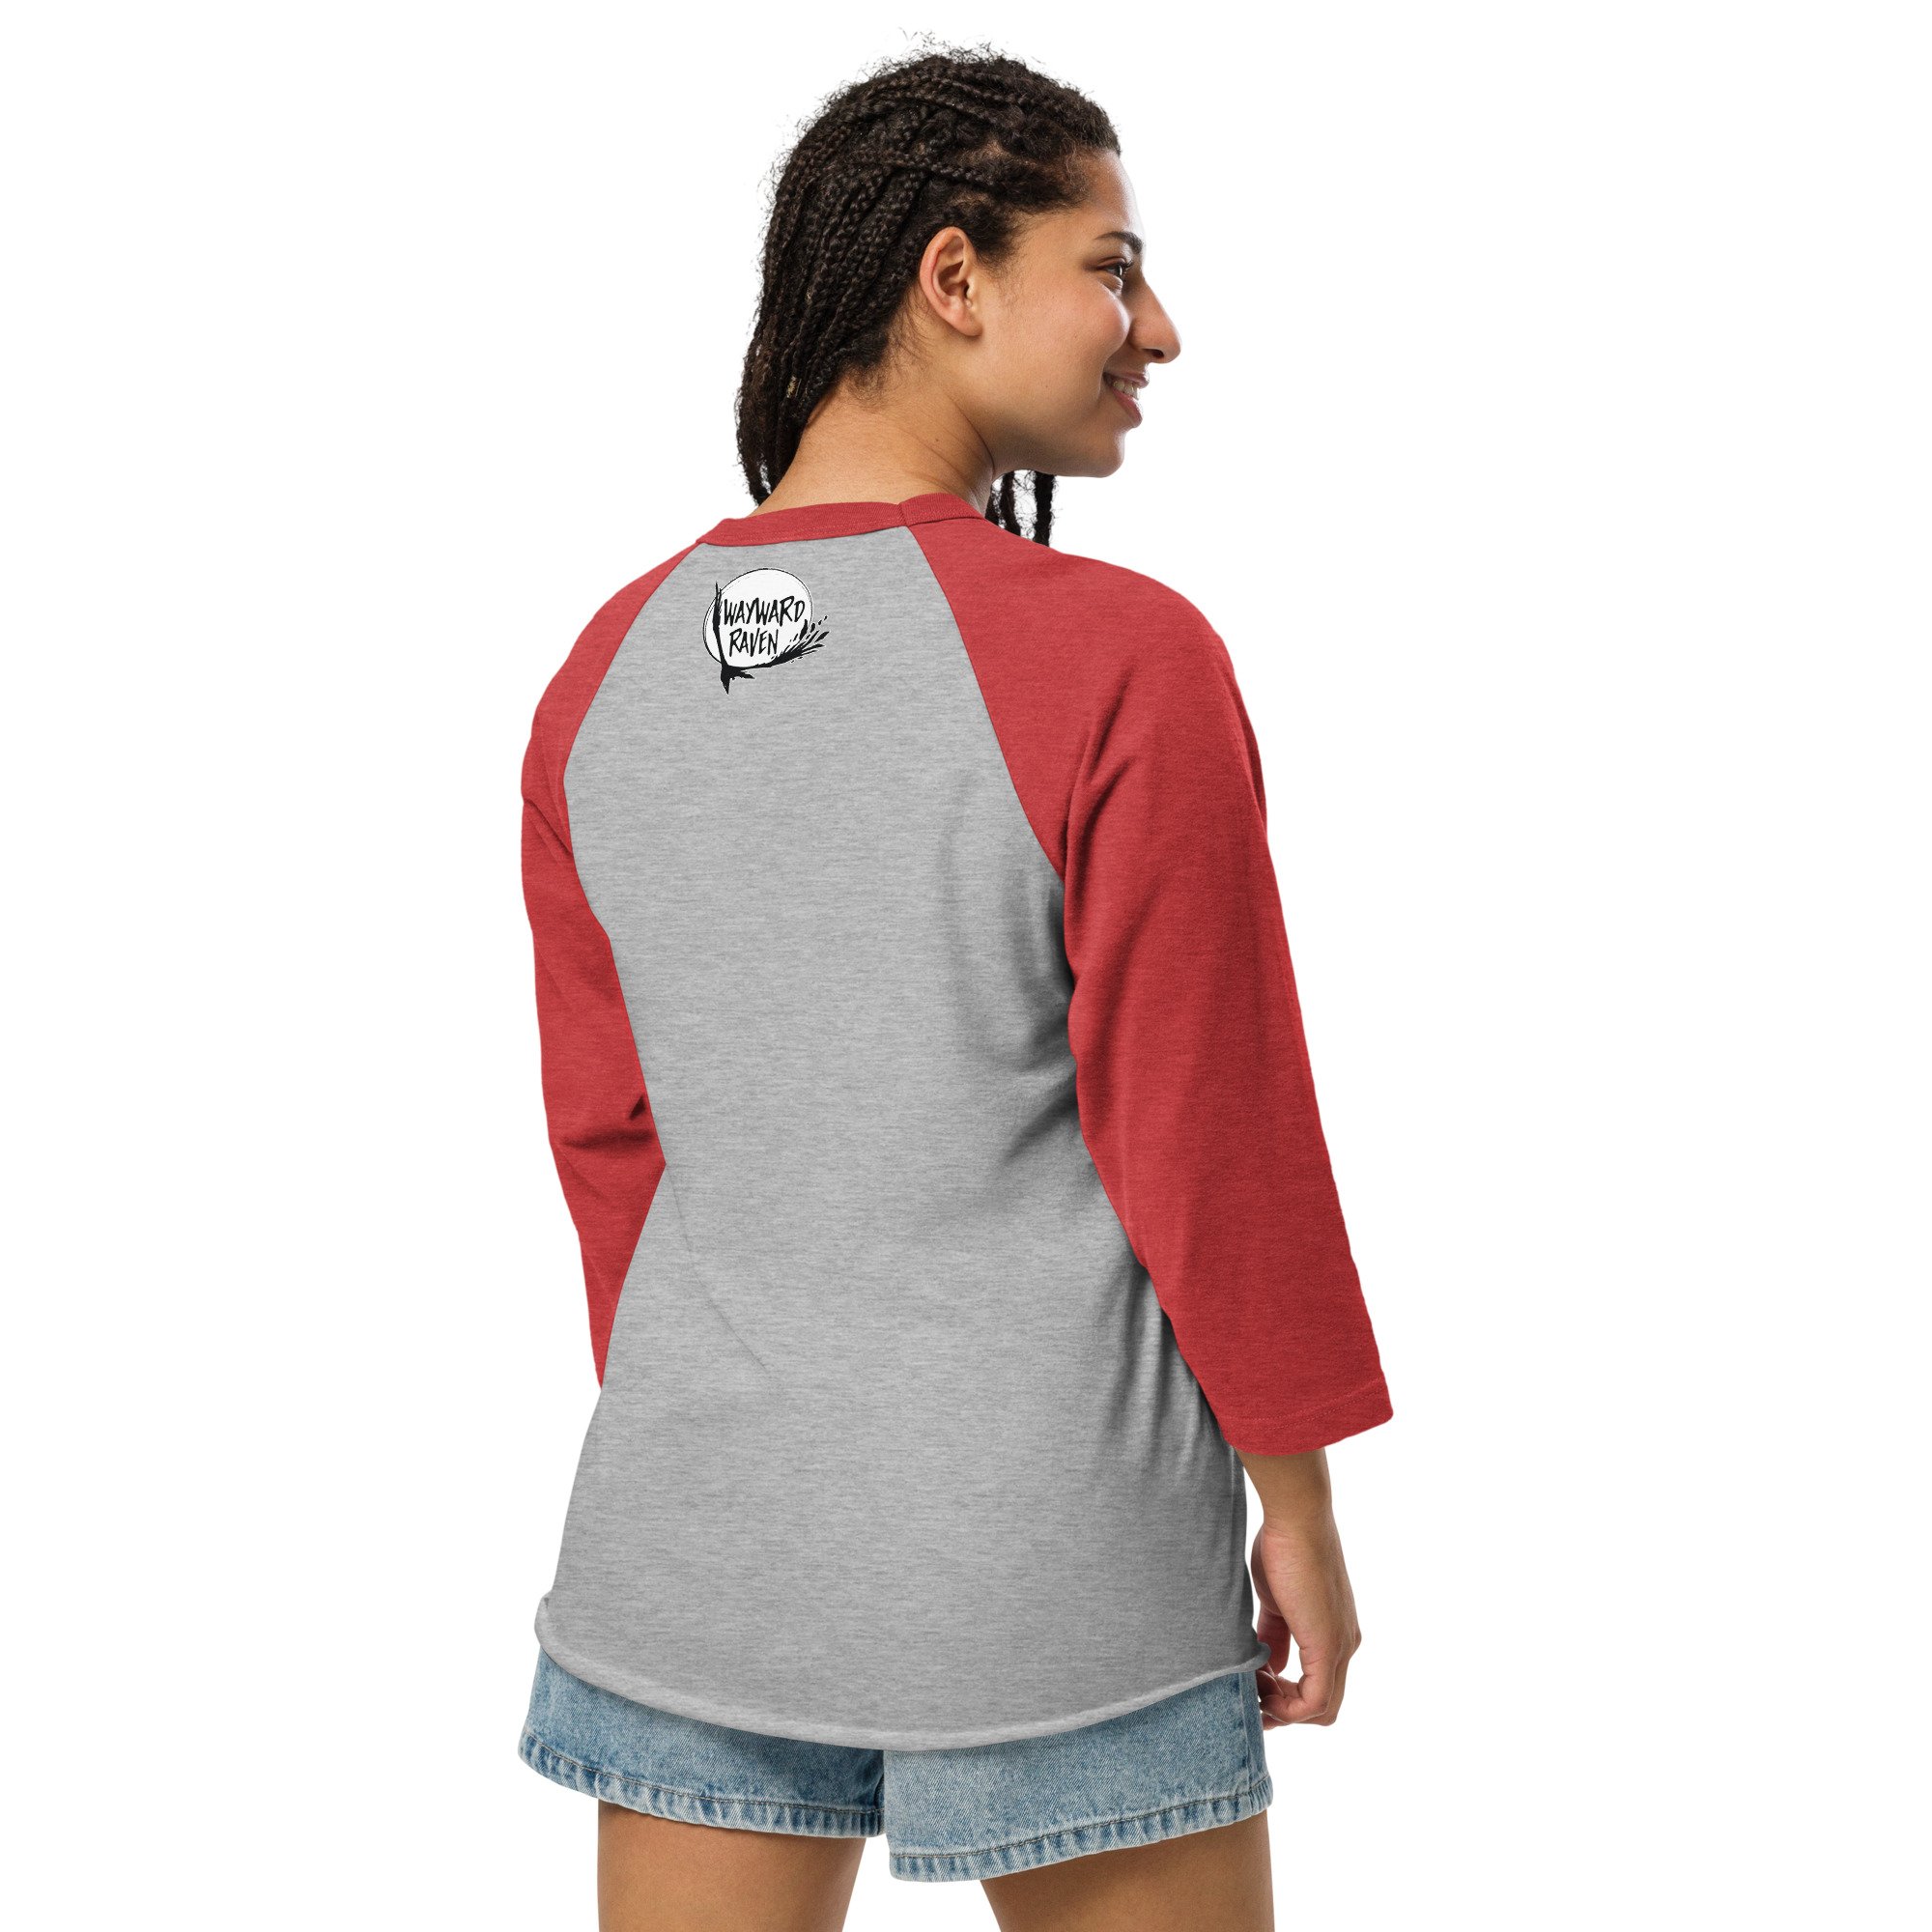 unisex-34-sleeve-raglan-shirt-heather-grey-heather-red-back-65fdcb001b2d2.jpg